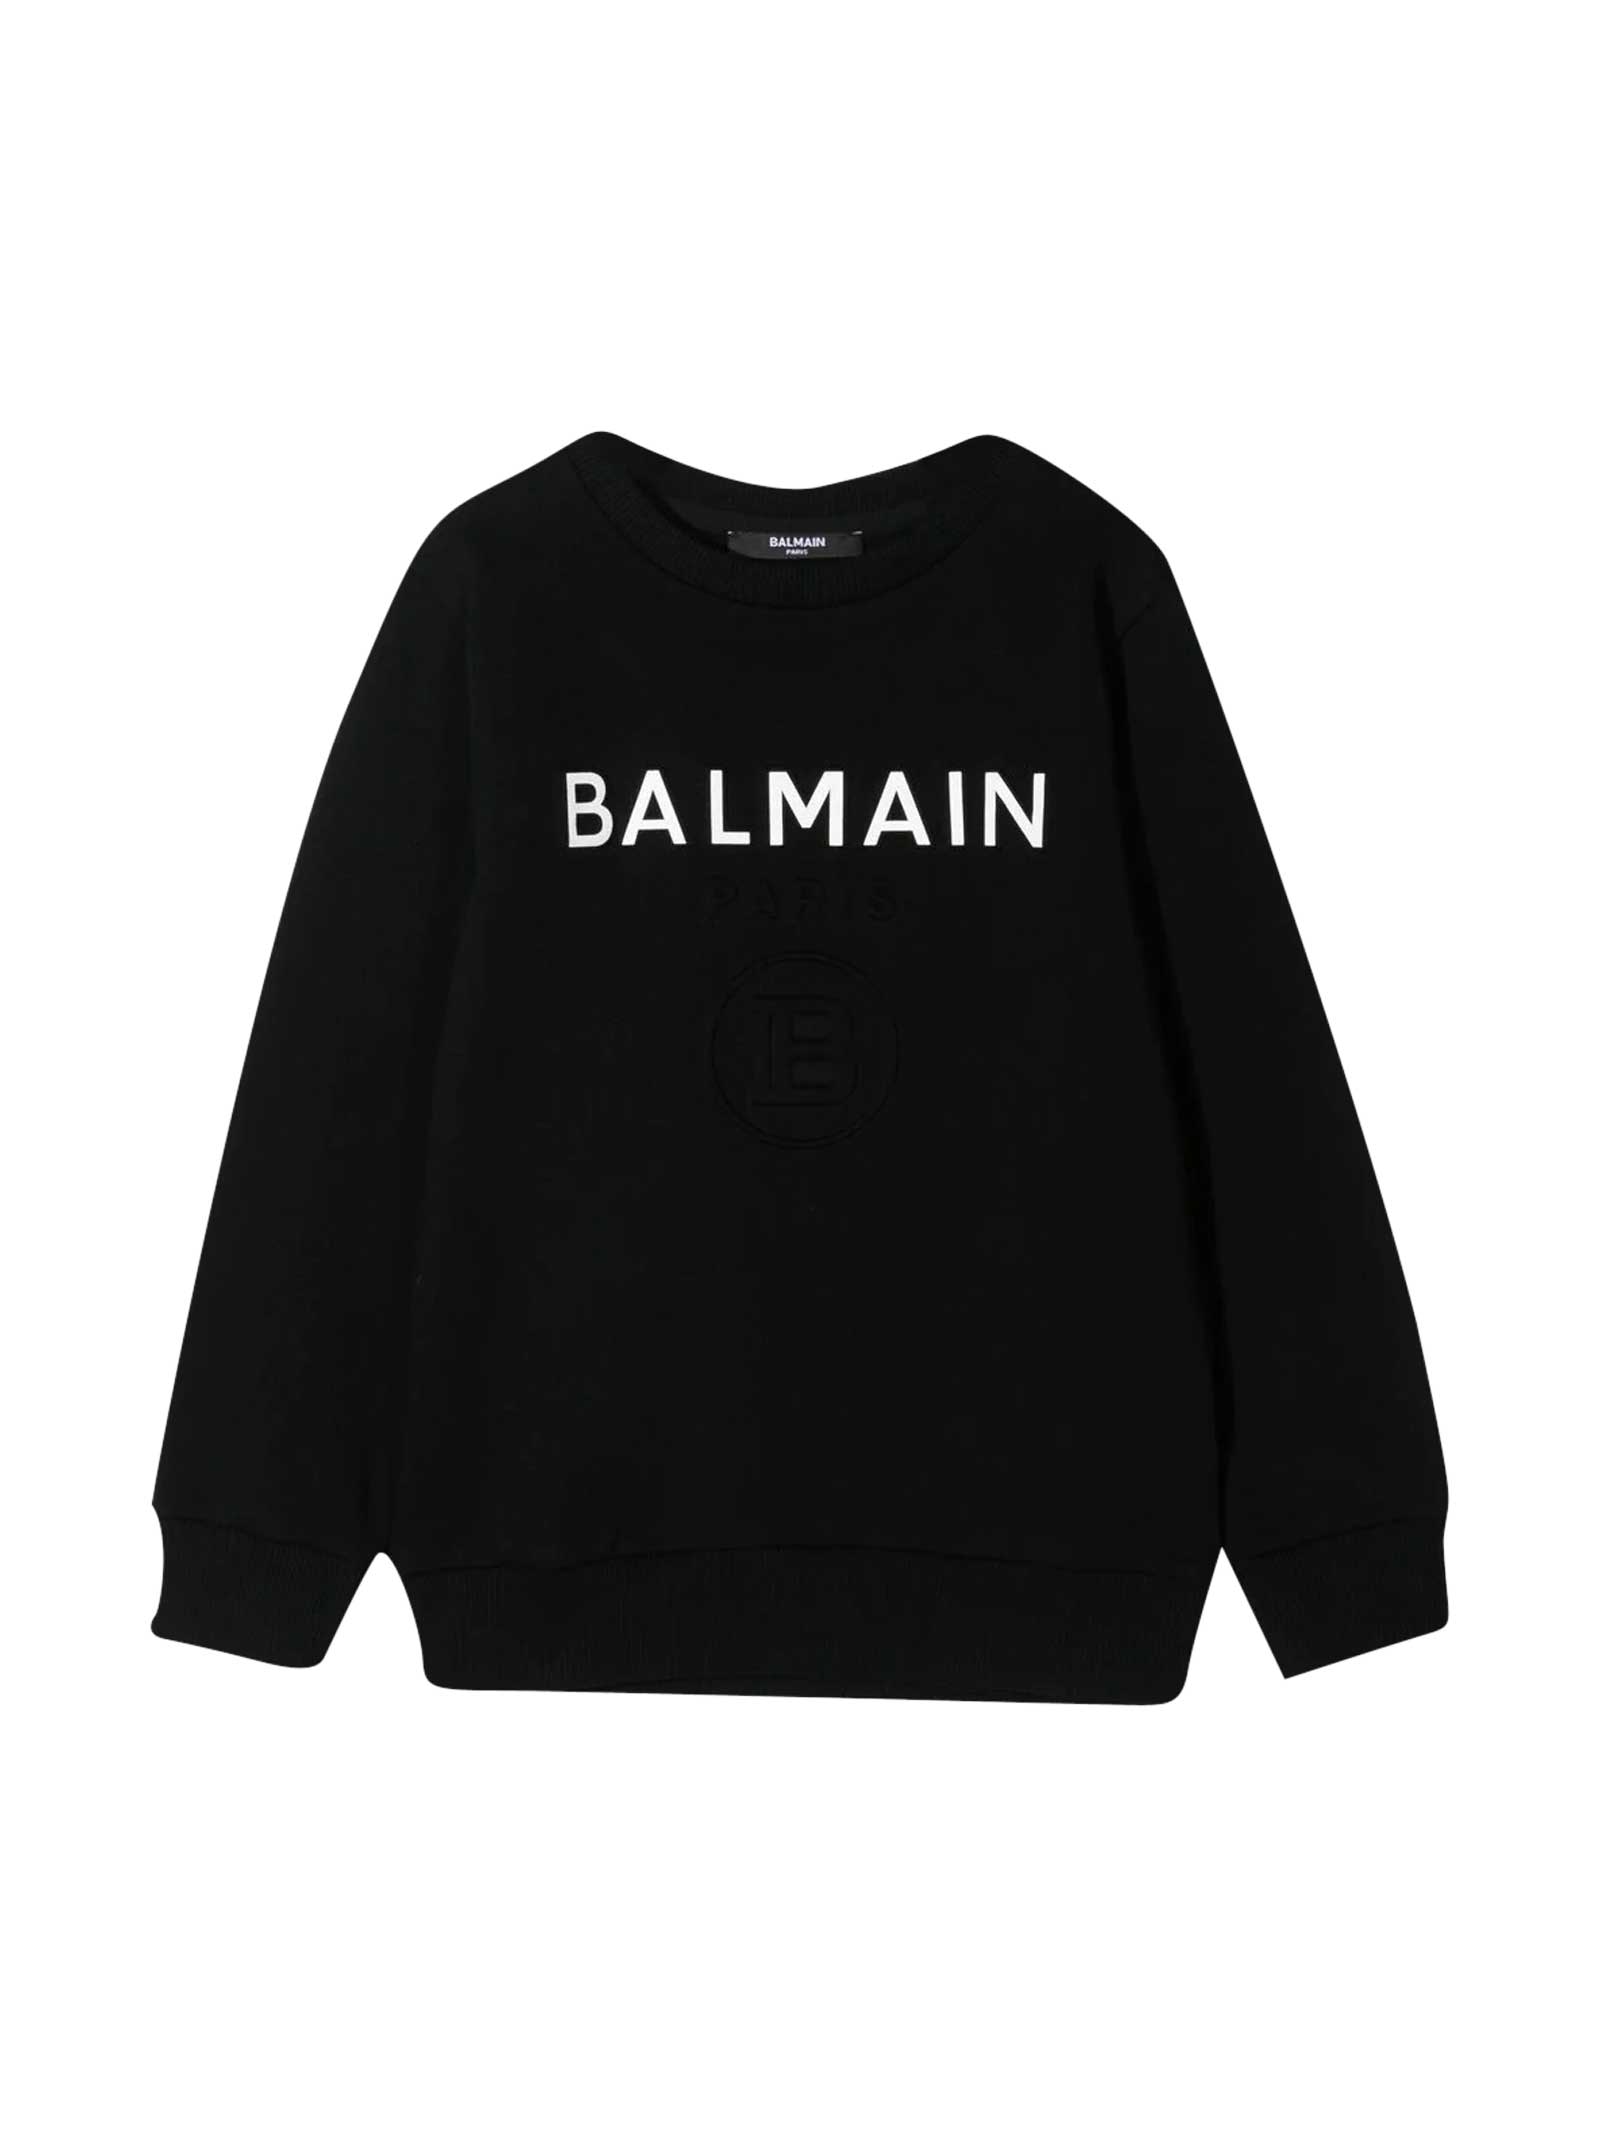 Balmain Sweatshirt With Press